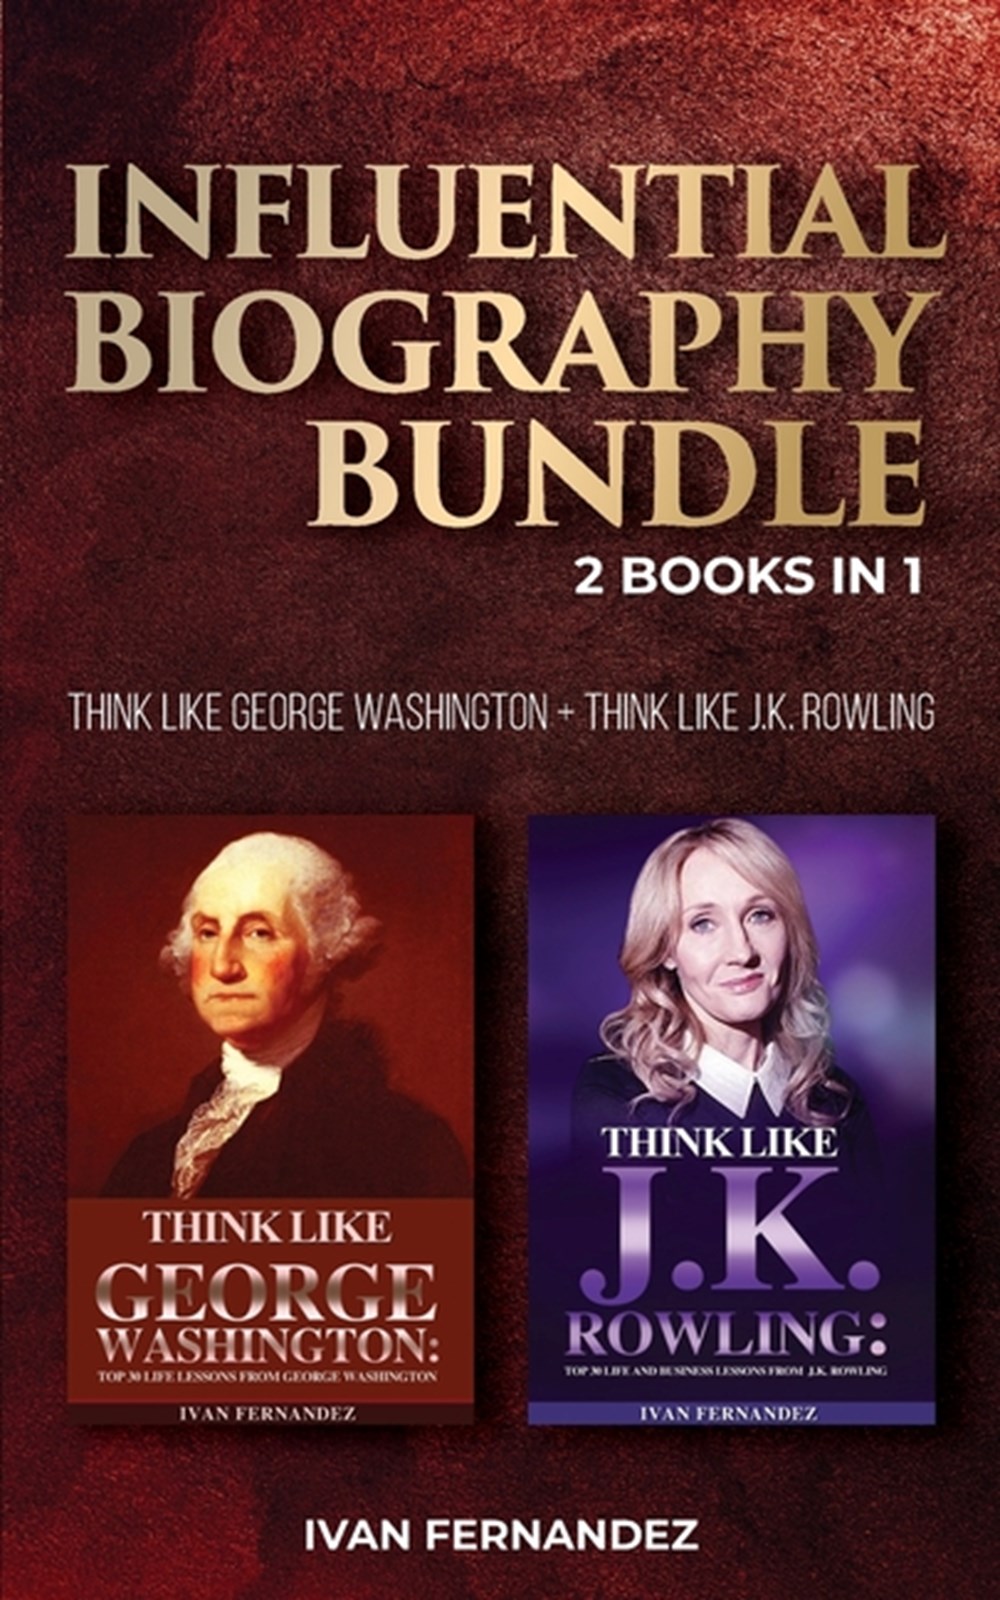 Influential Biography Bundle 2 Books in 1: Think Like George Washington + Think Like J.K. Rowling